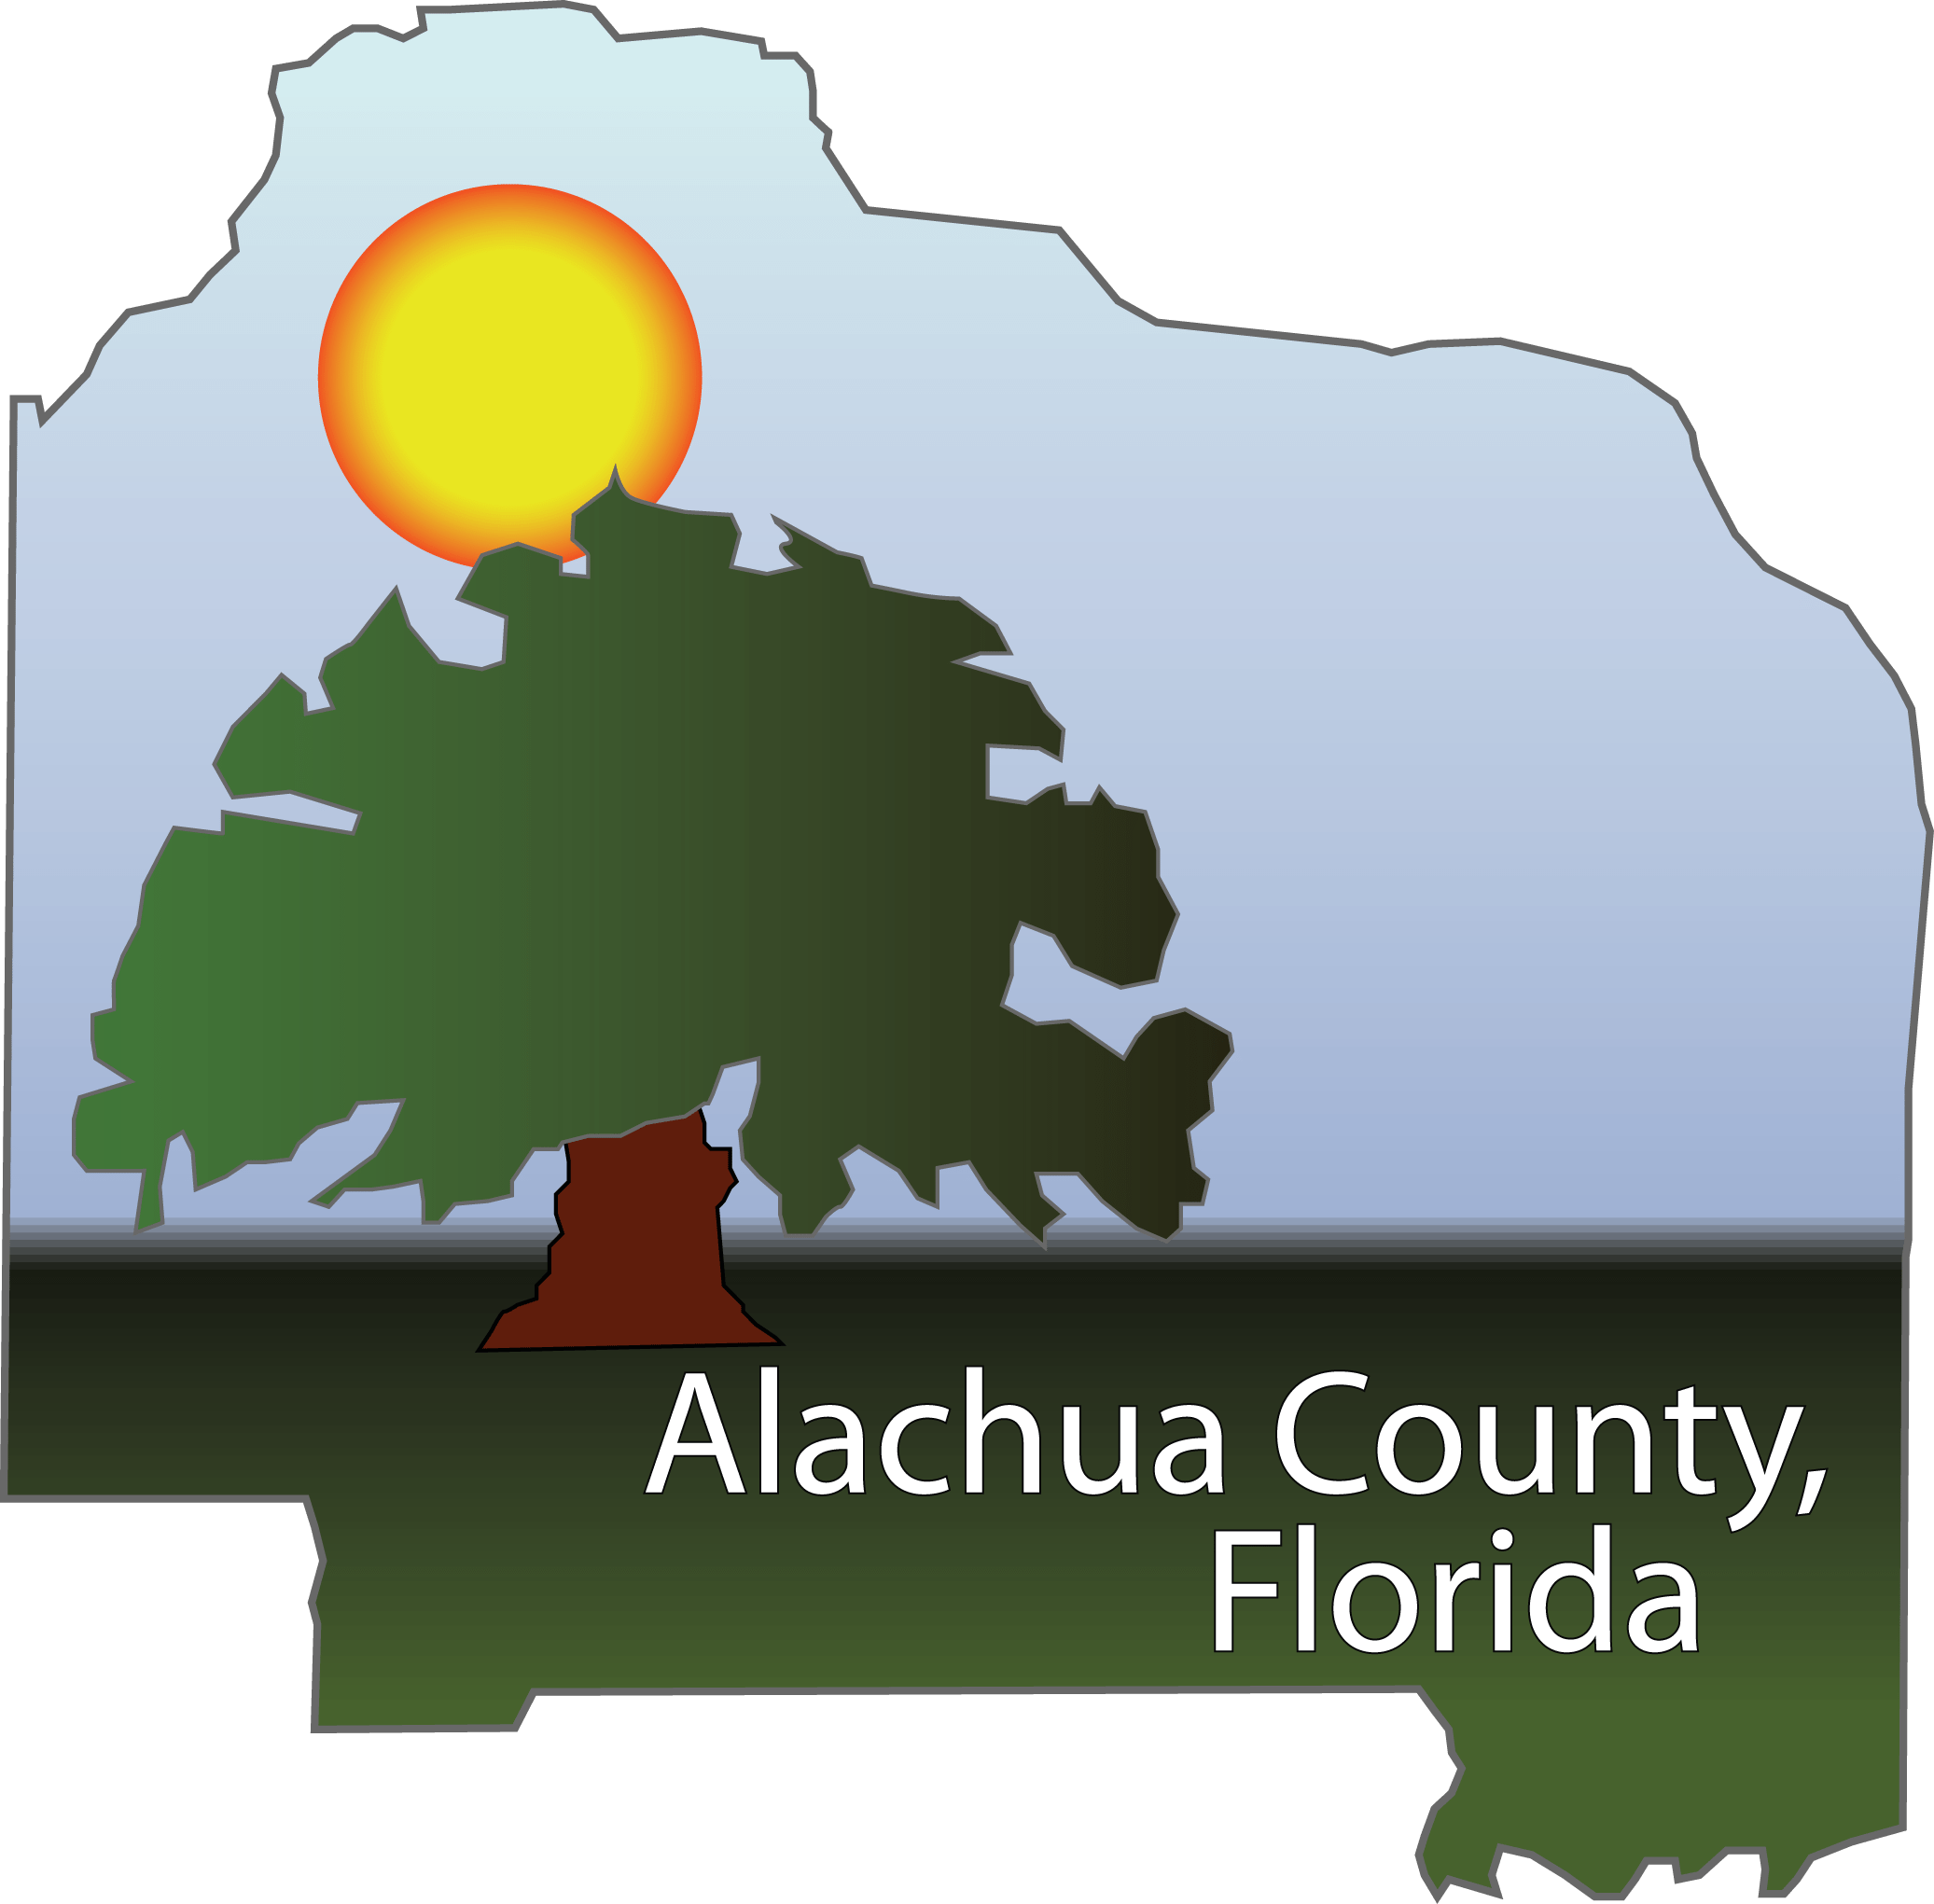 Alachua County seeking board members for Empowerment Center group